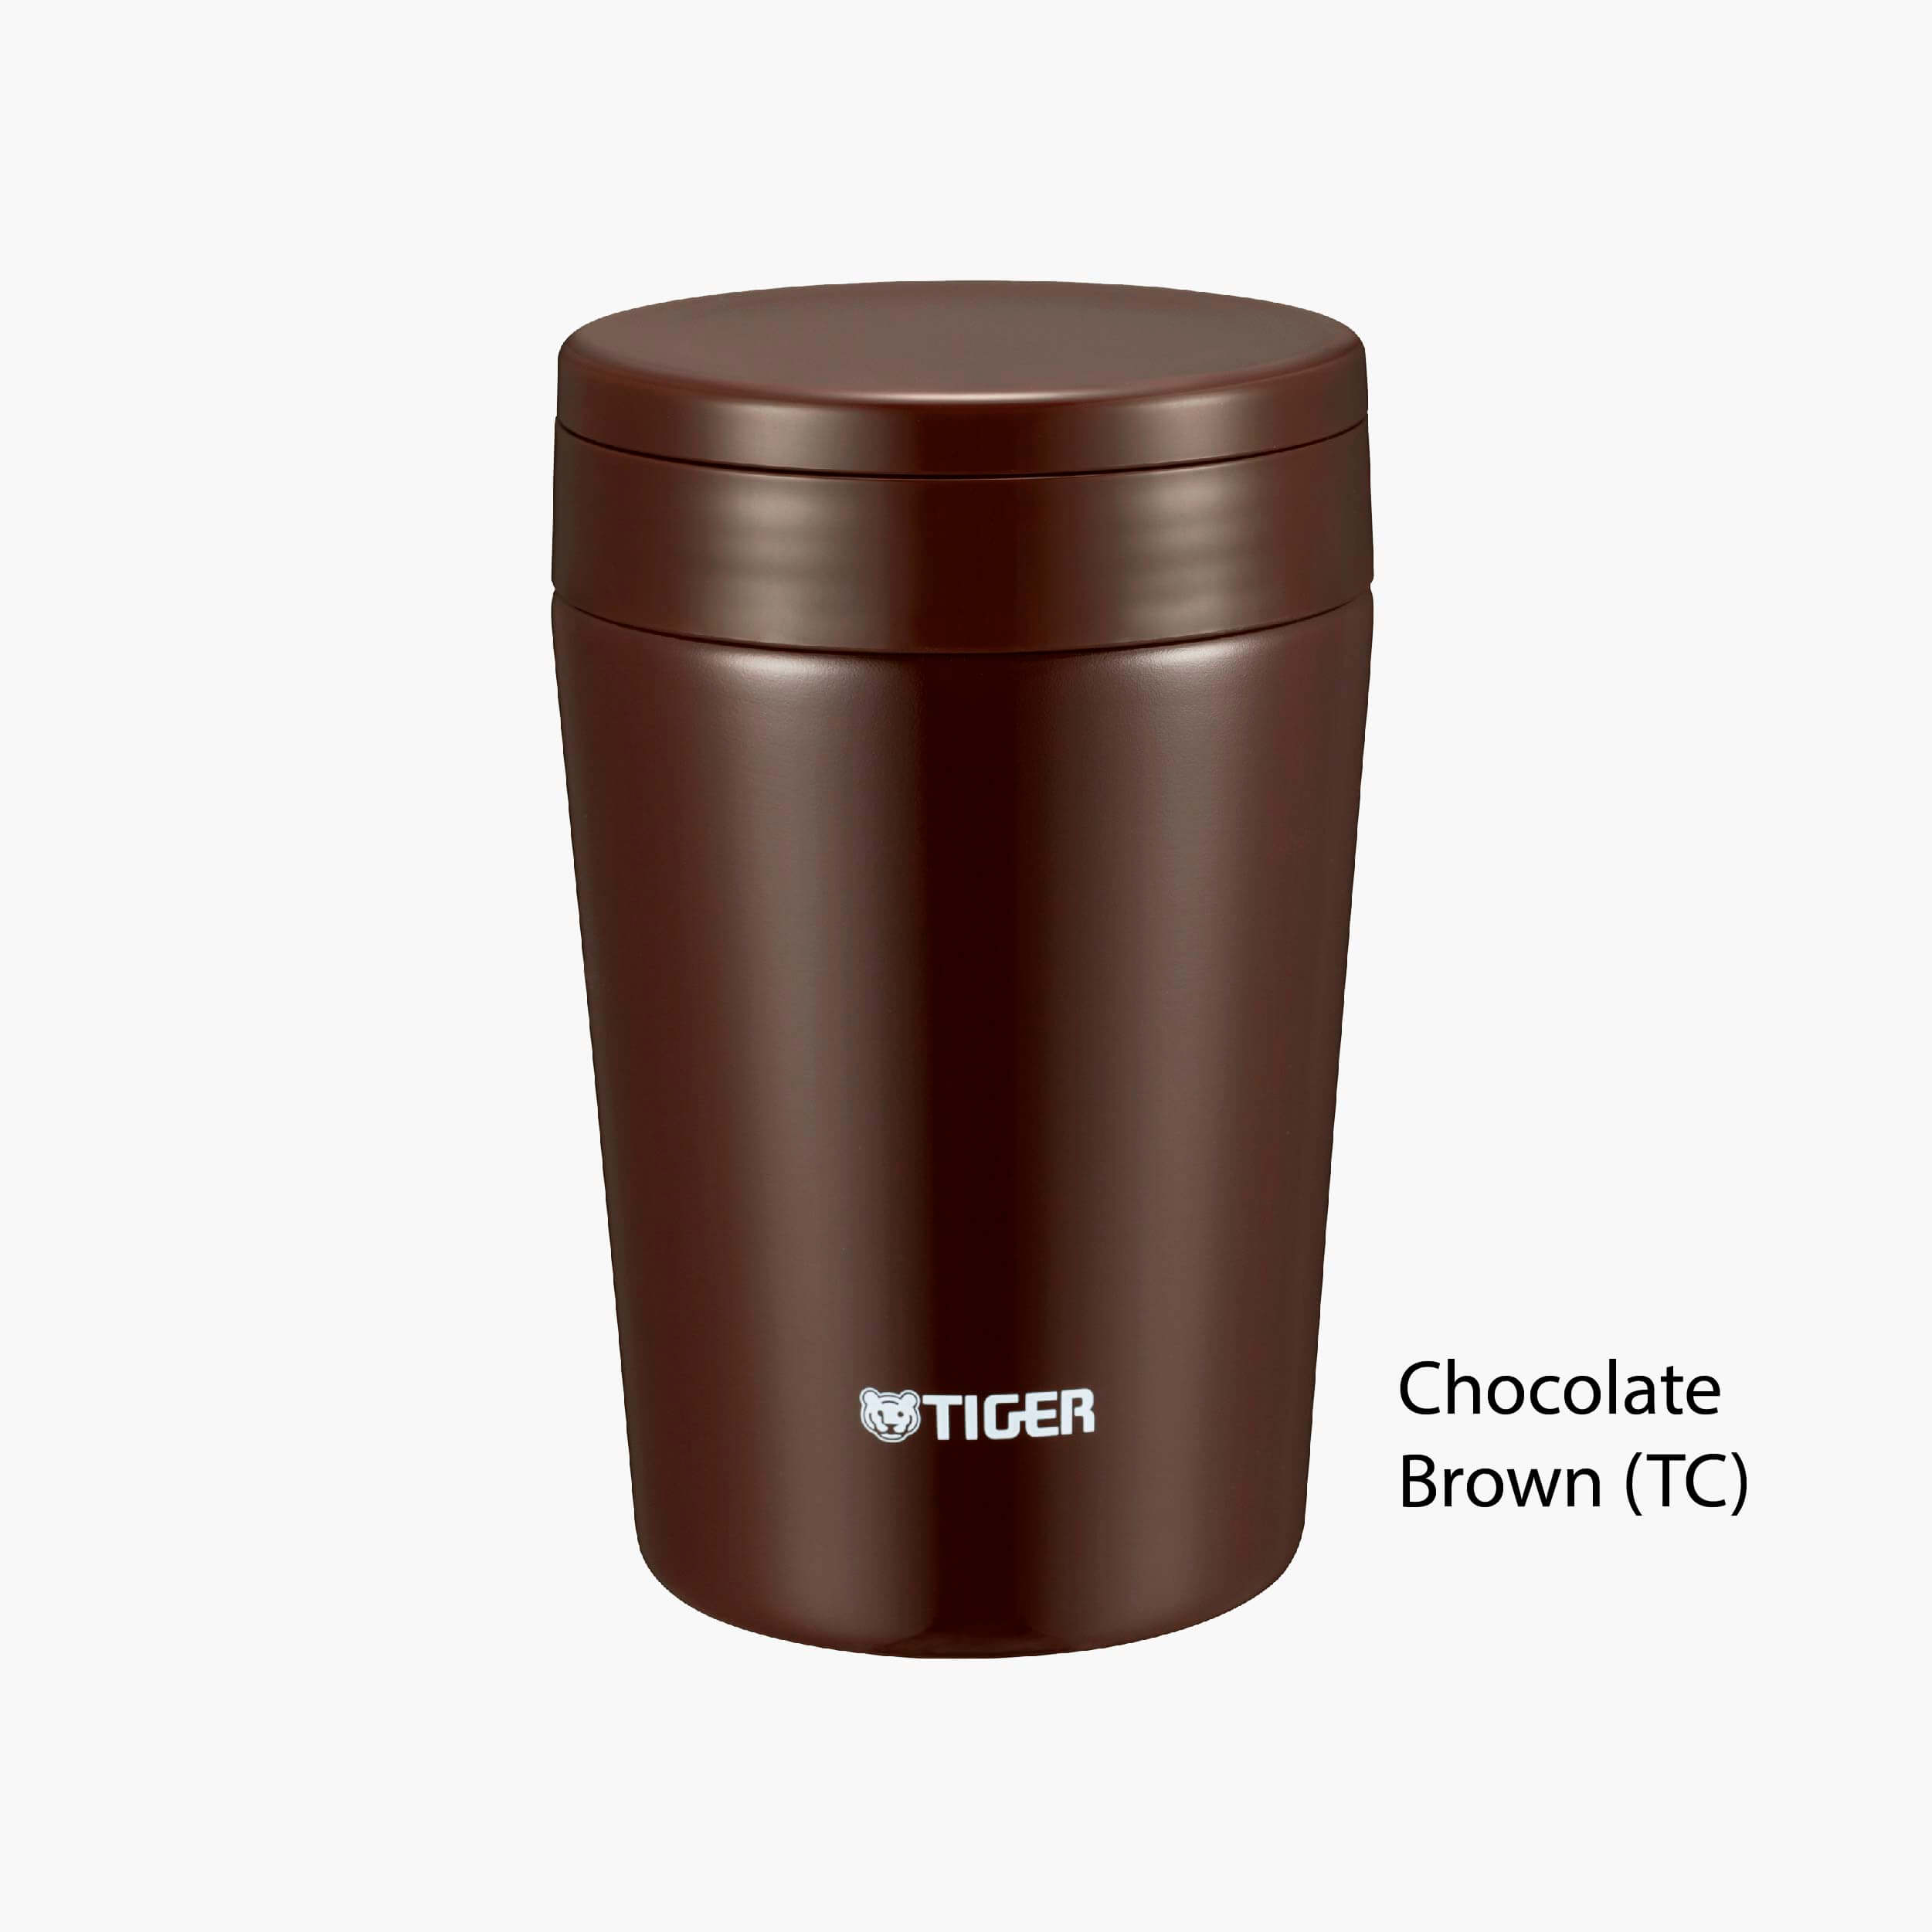 Chocolate Brown (TC)